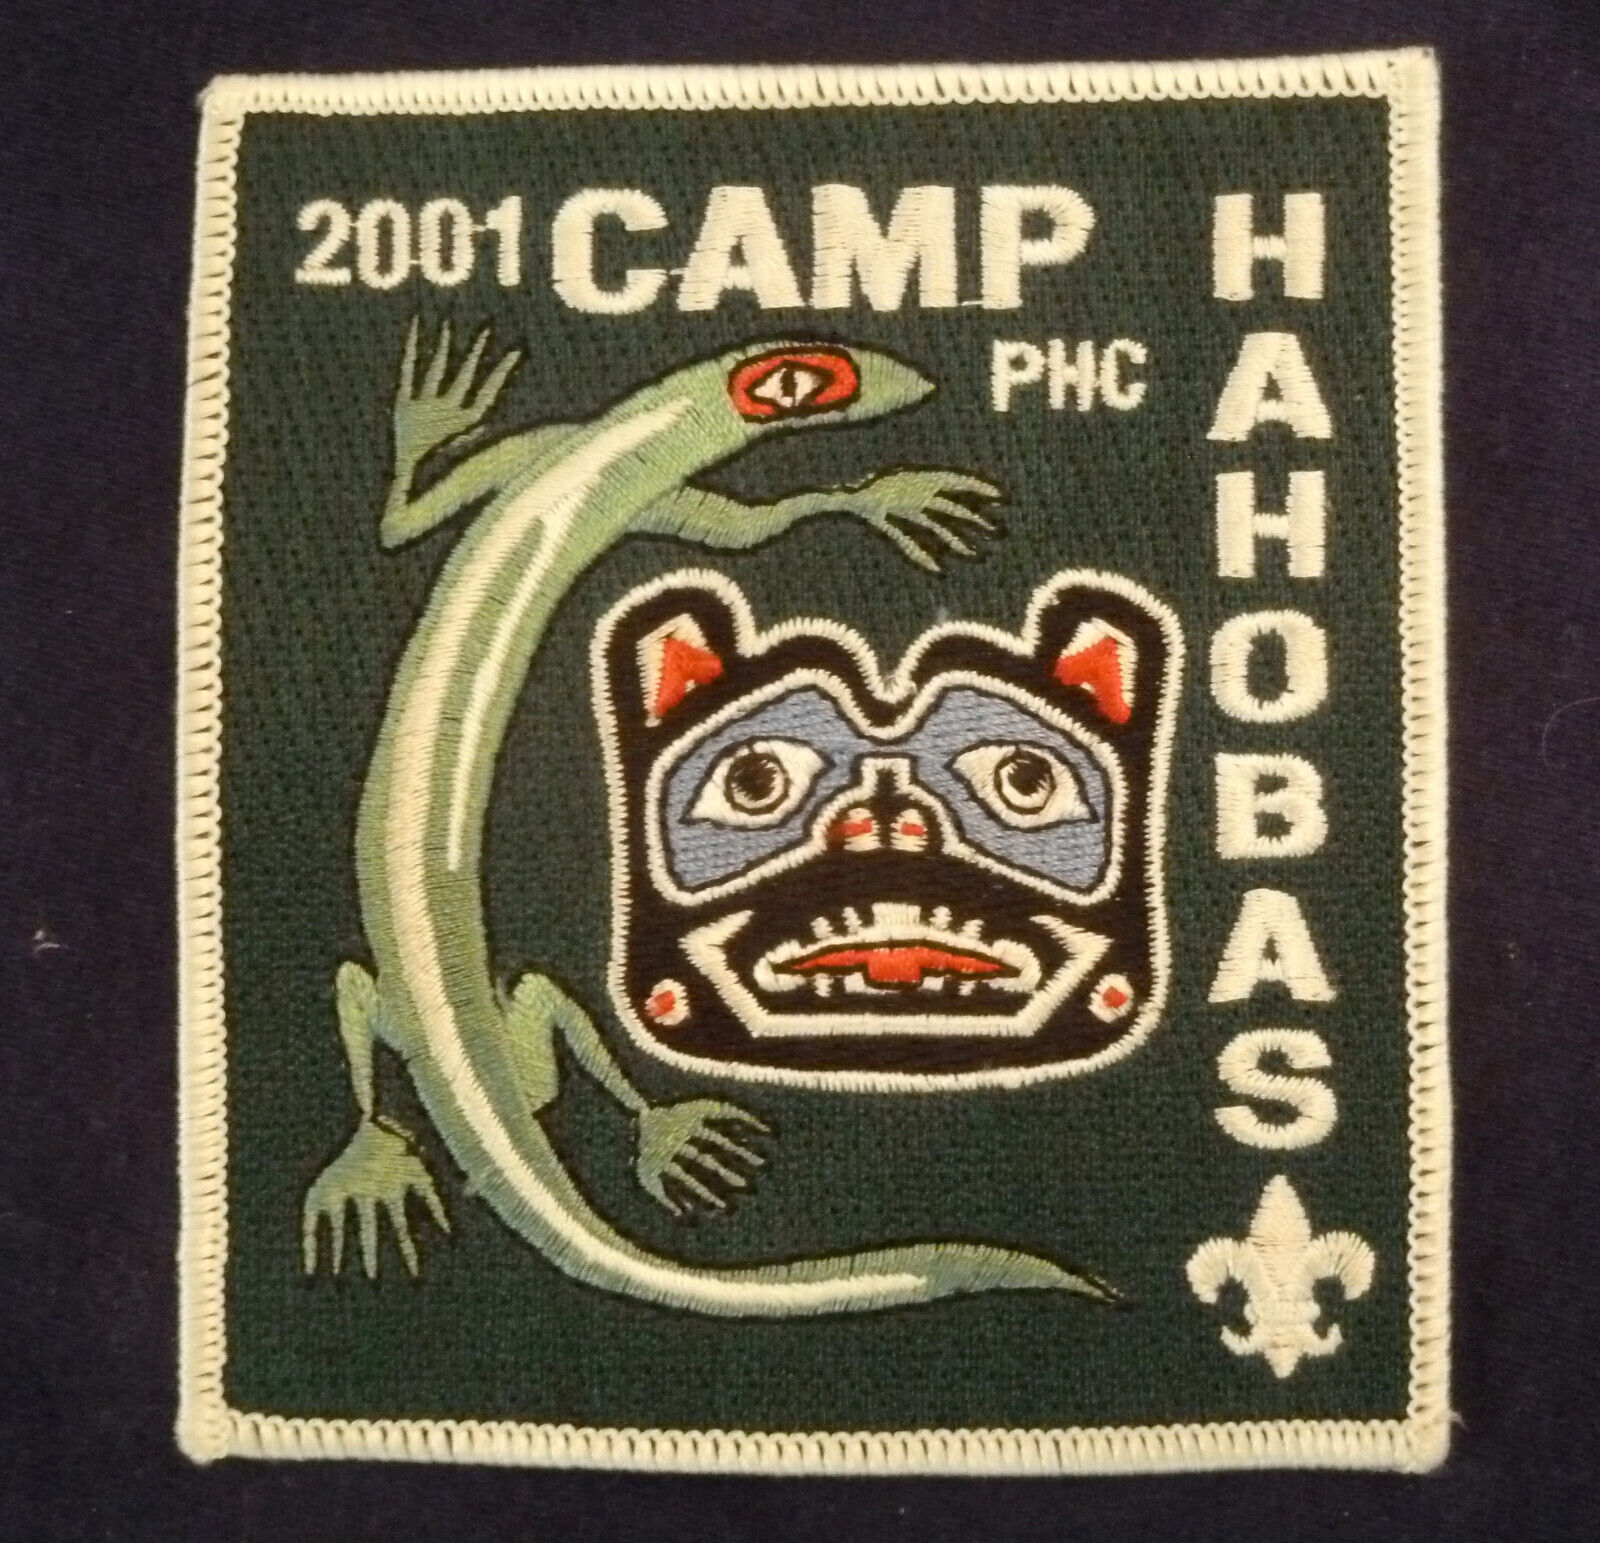 Camp Hahobas 2001 - Pacific Harbors Council